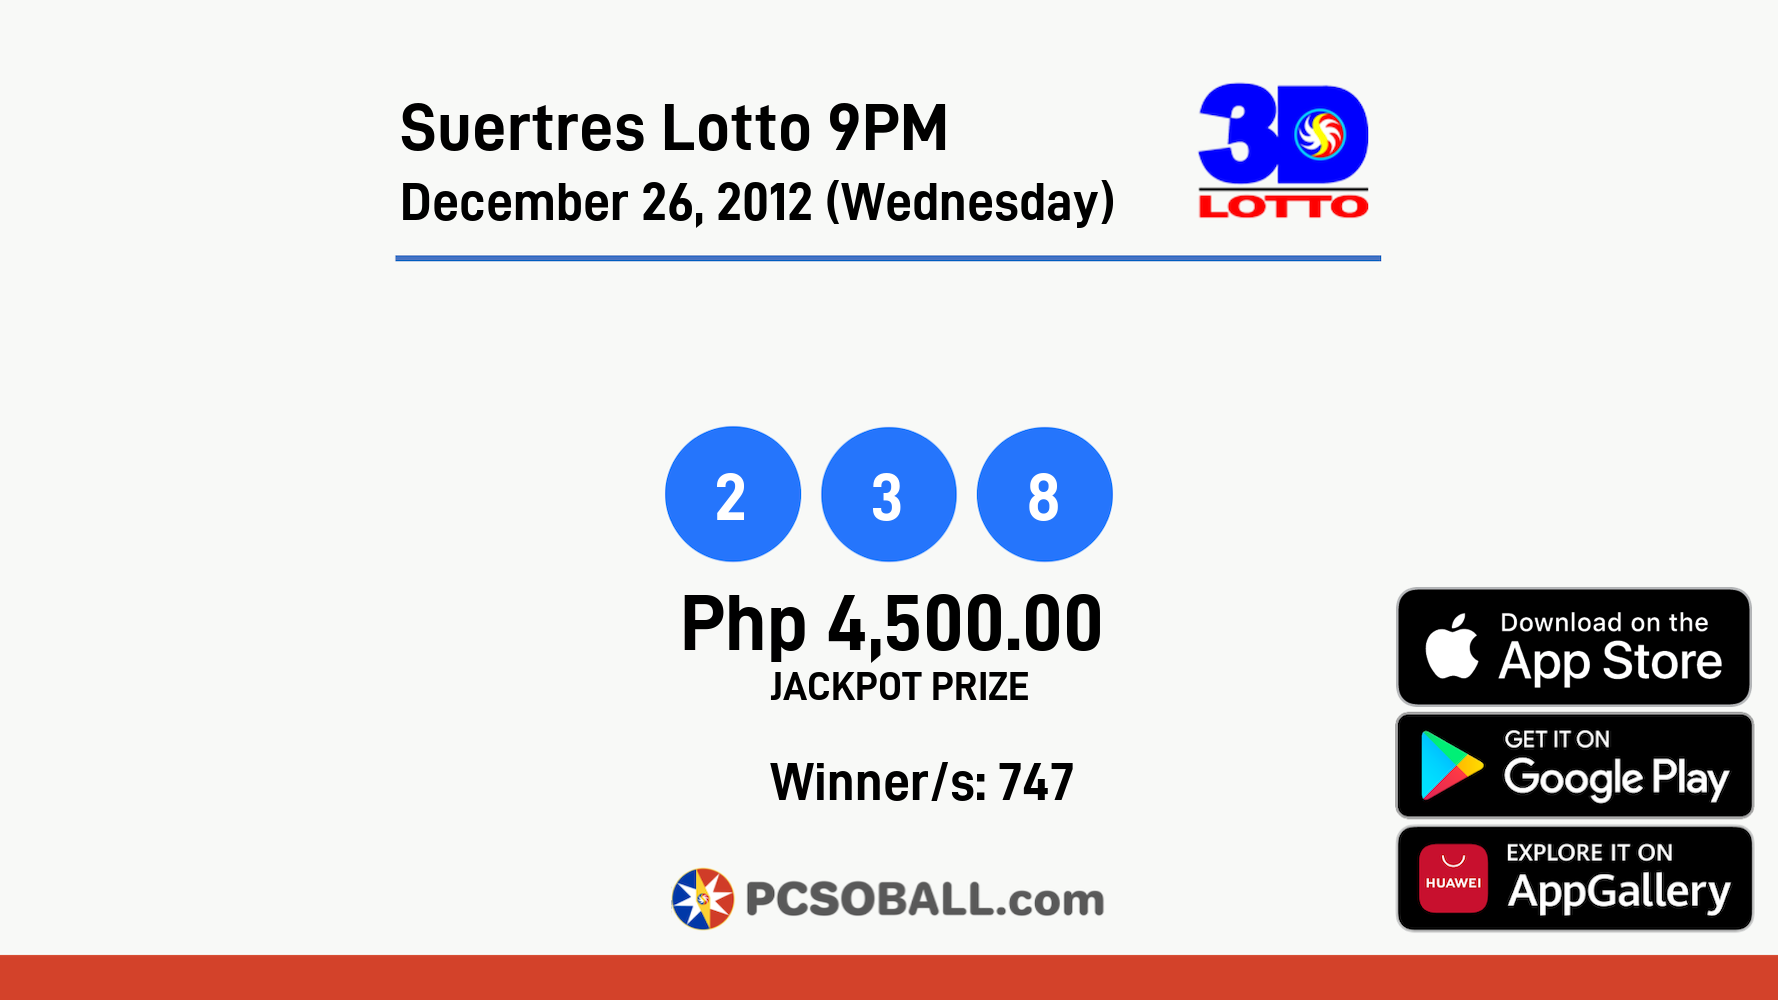 Suertres Lotto 9PM December 26, 2012 (Wednesday) Result